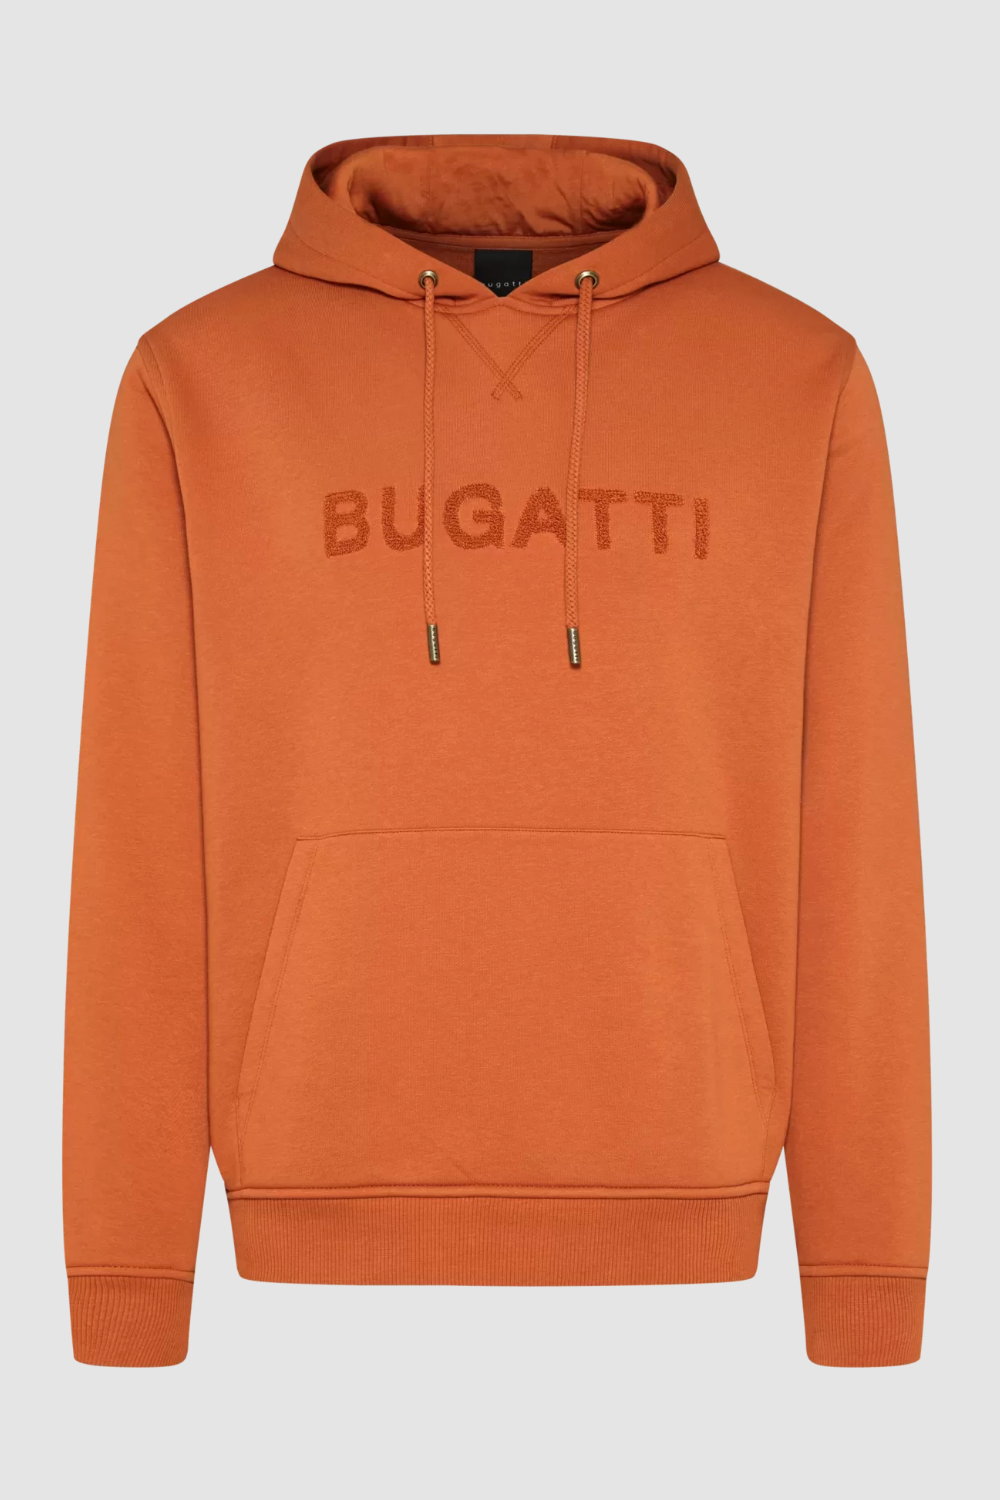 Bugatti hoodie in orange – chrisjameskingston